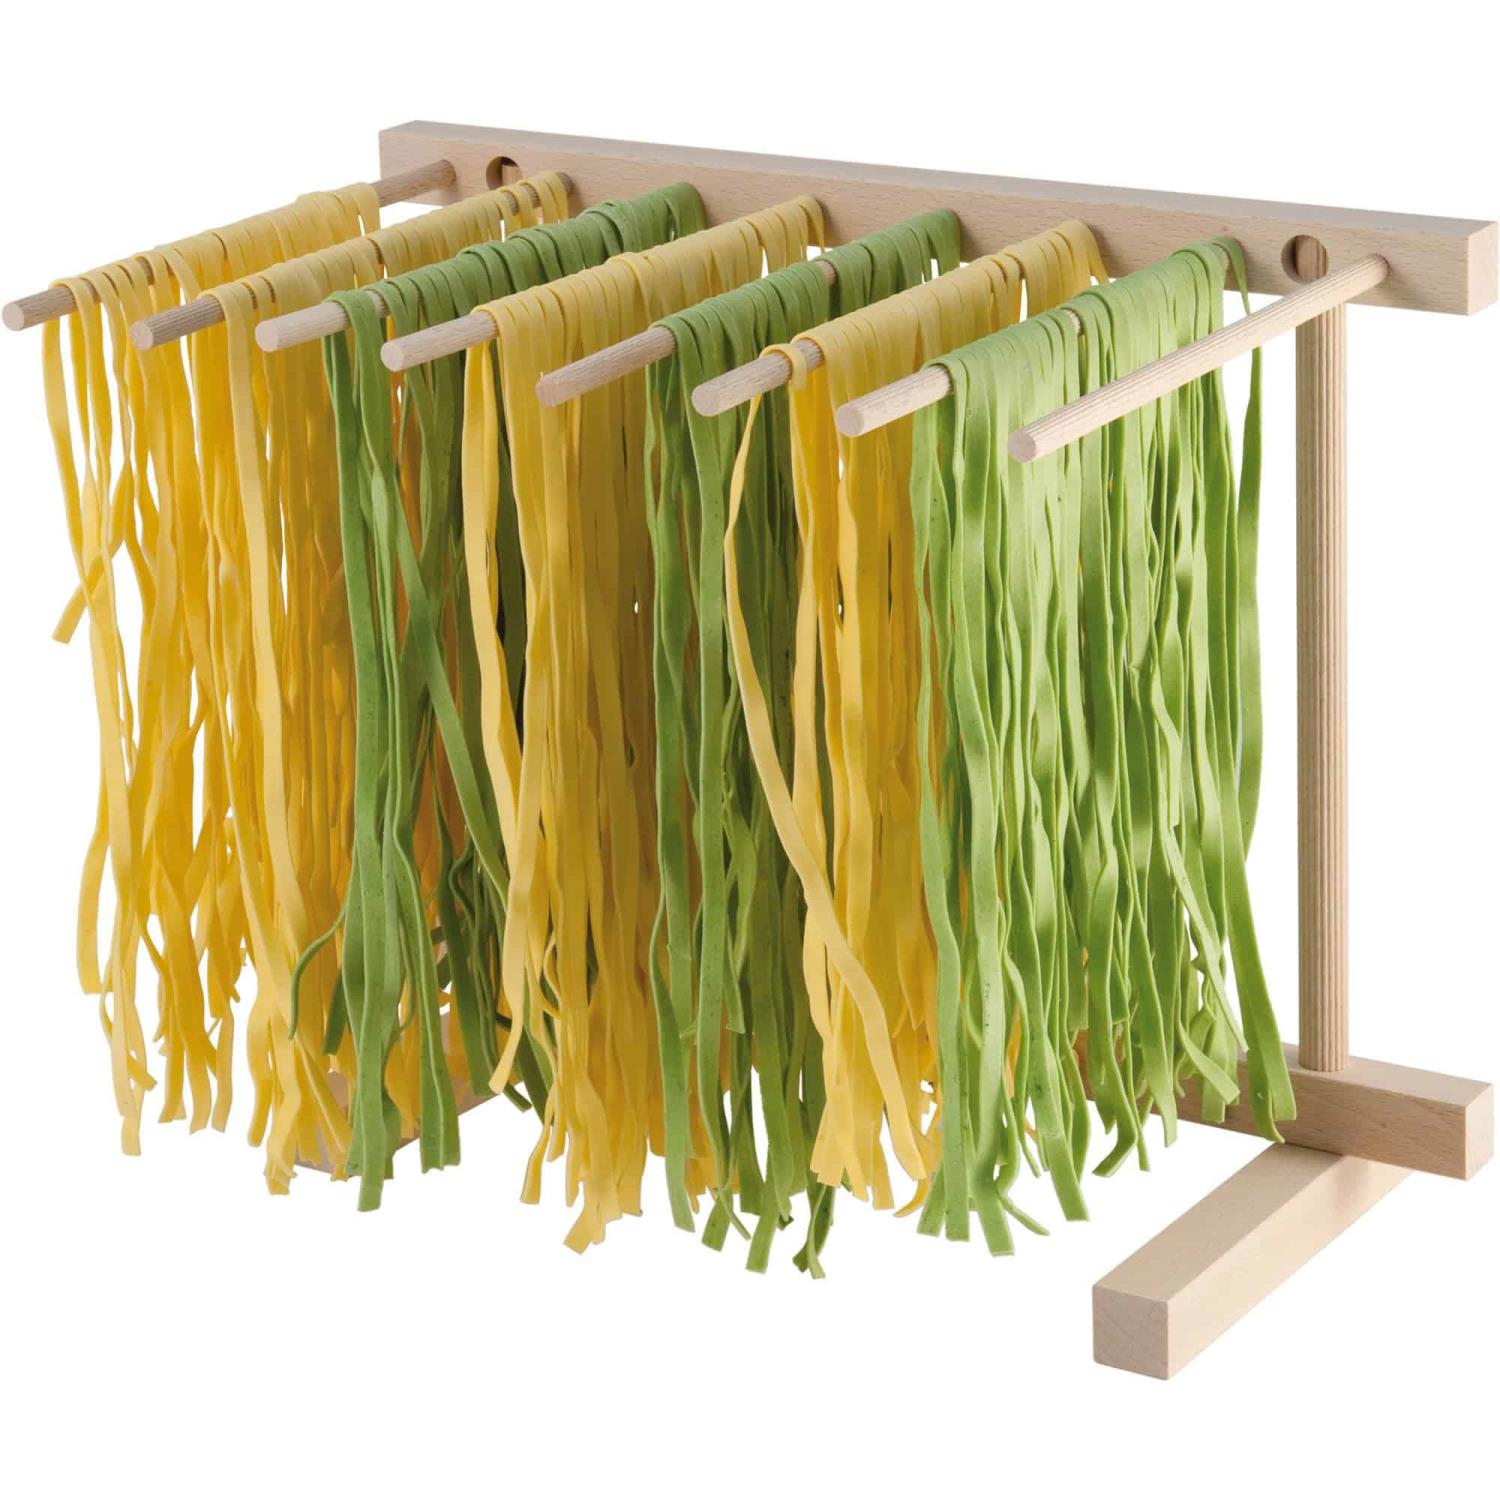 Stendi pasta dying rack